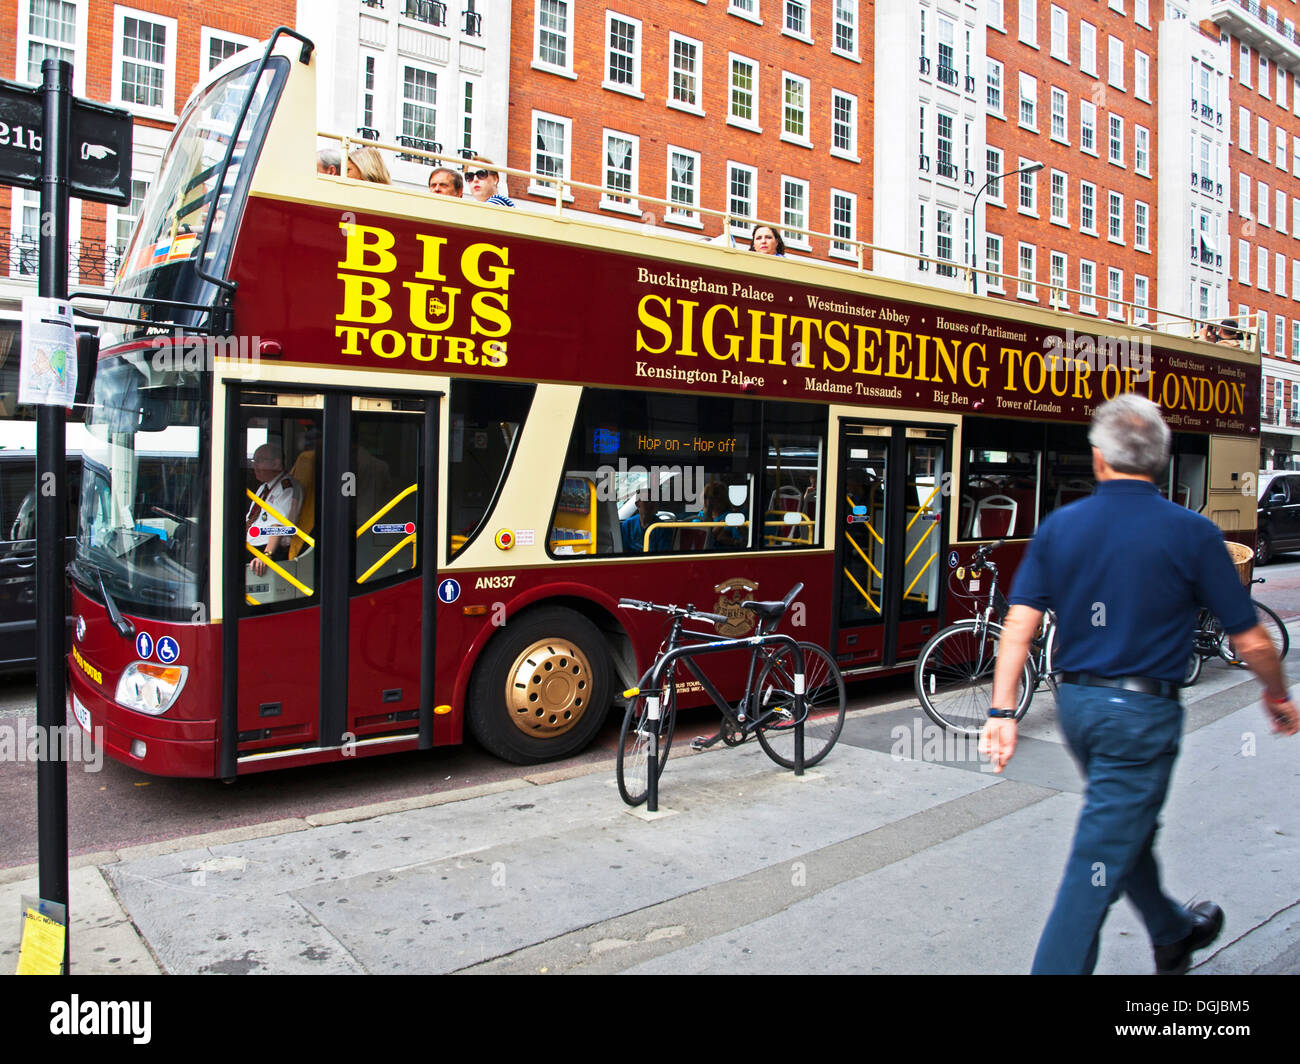 Big Bus Tours sightseeing bus, Baker Street, London, England, United Kingdom Stock Photo